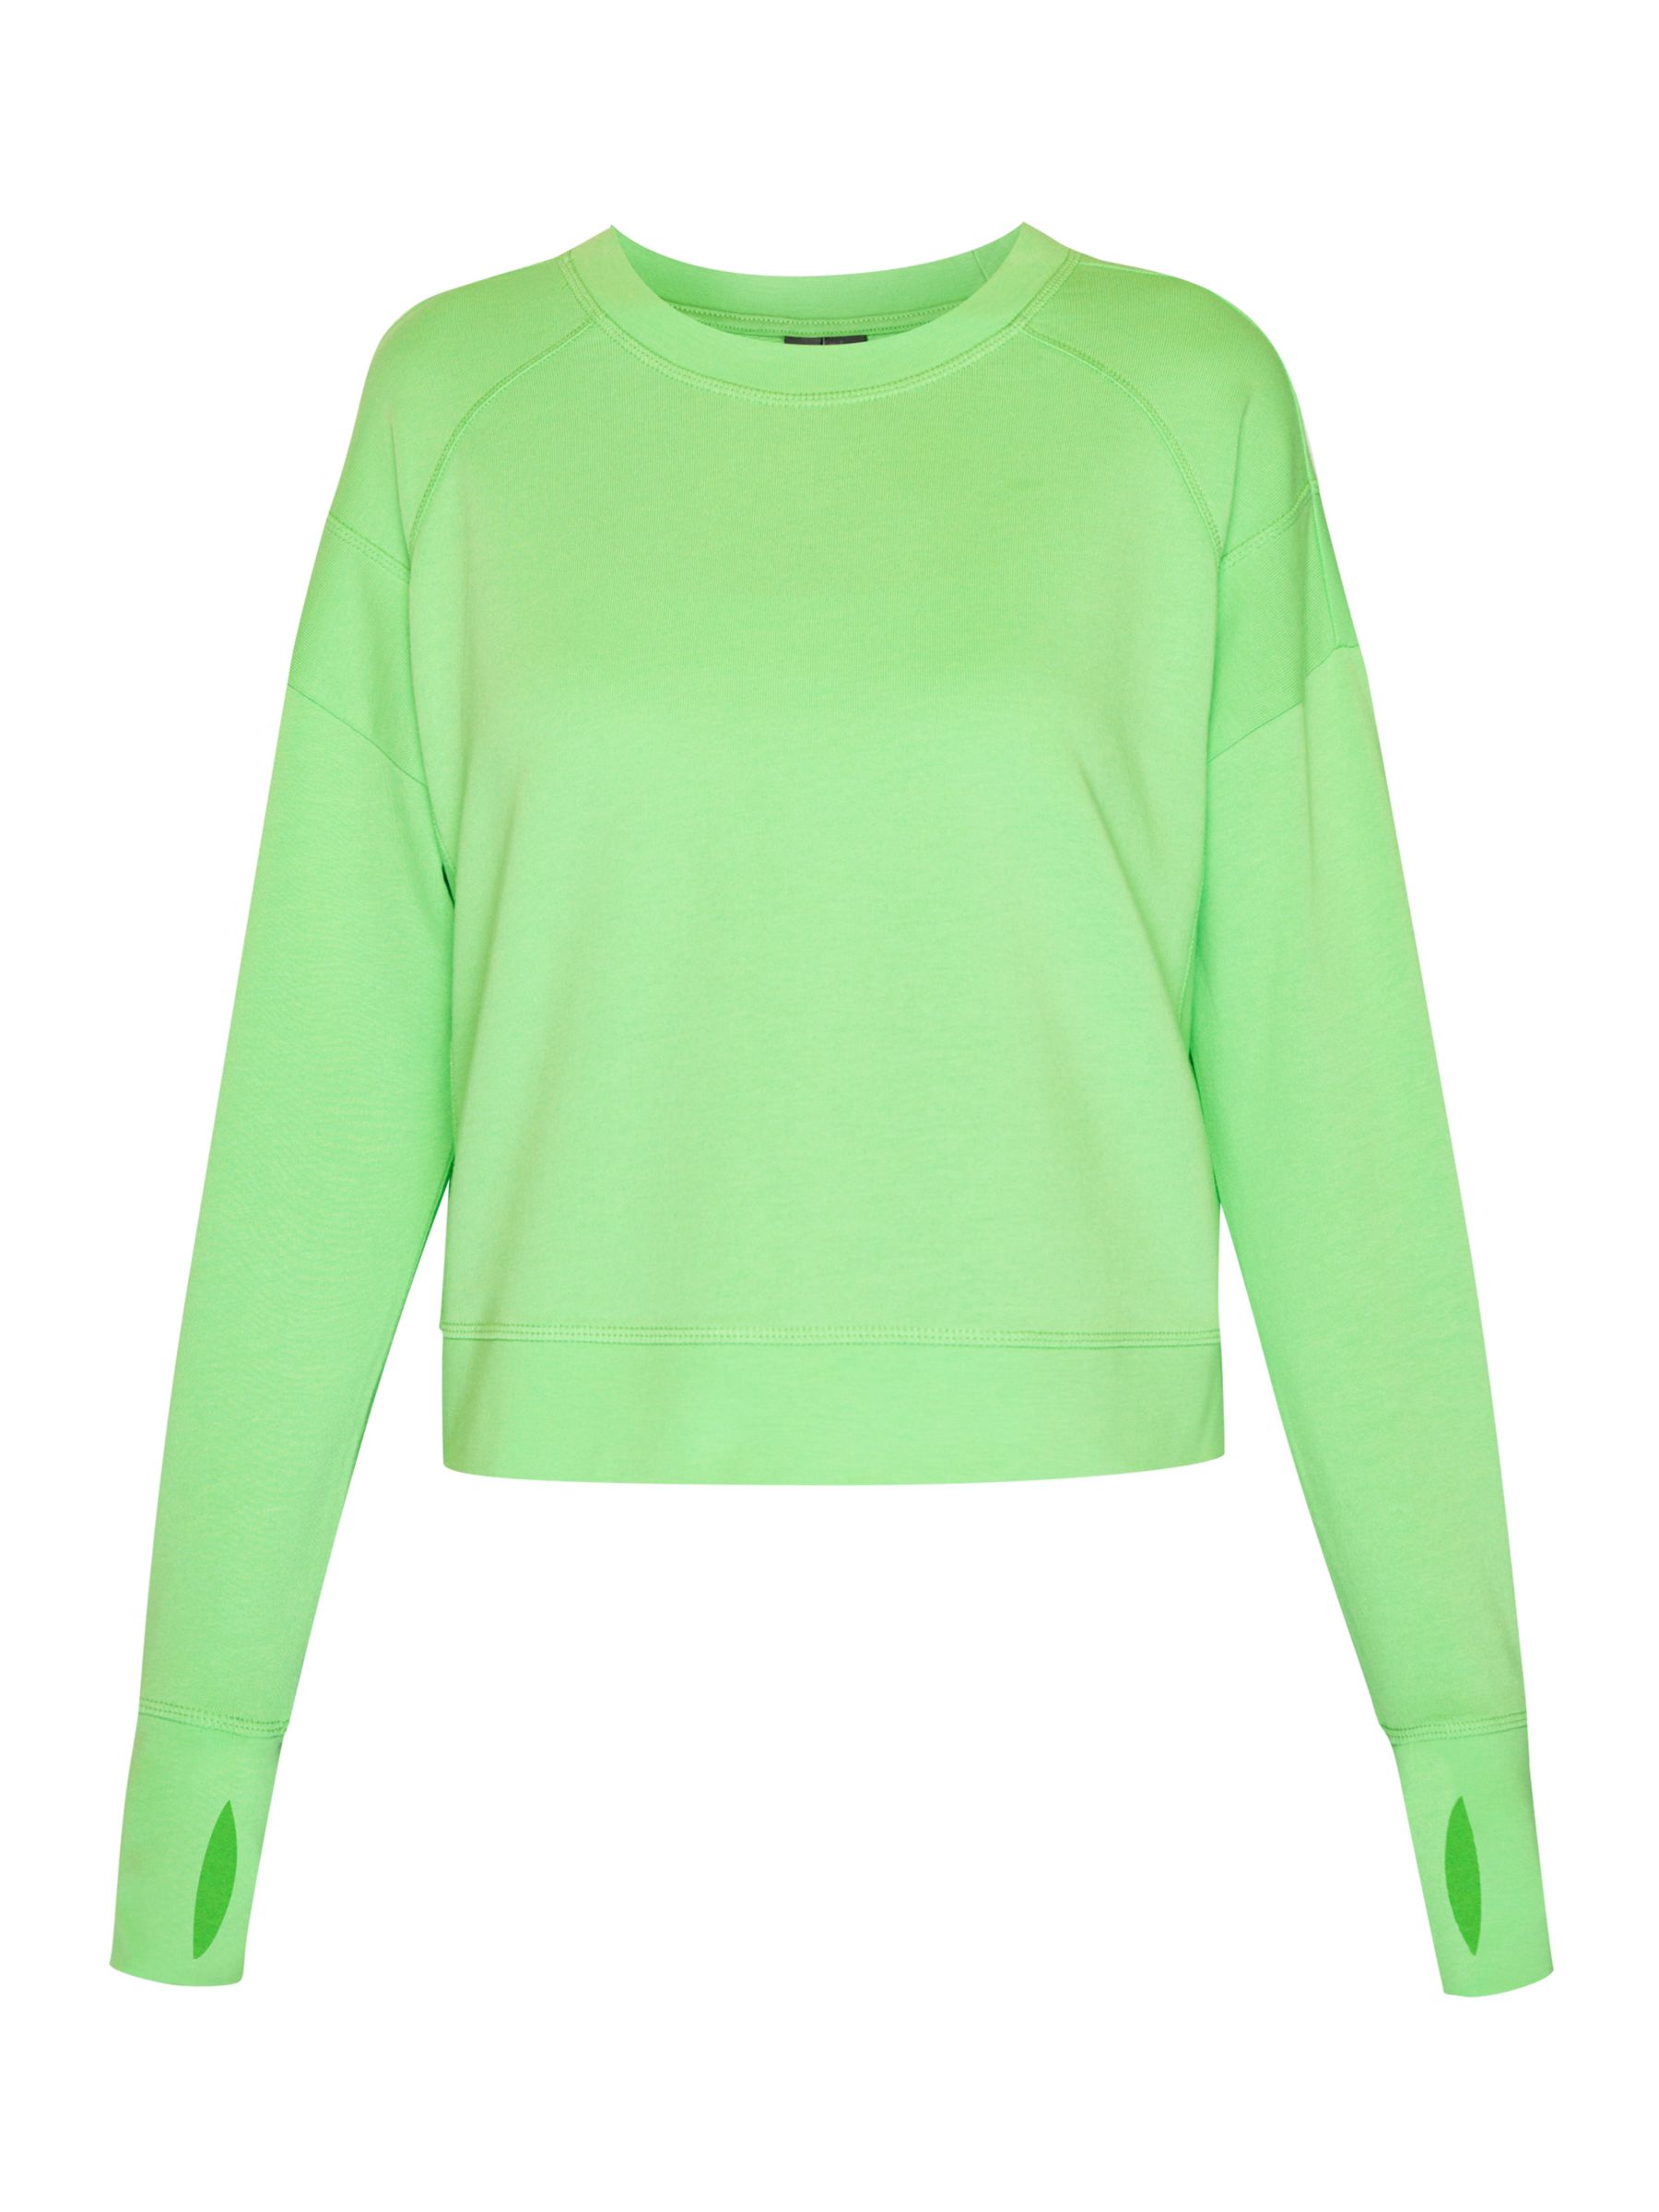 Buy Sweaty Betty After Class Crop Sweatshirt, Zest Green Online at johnlewis.com